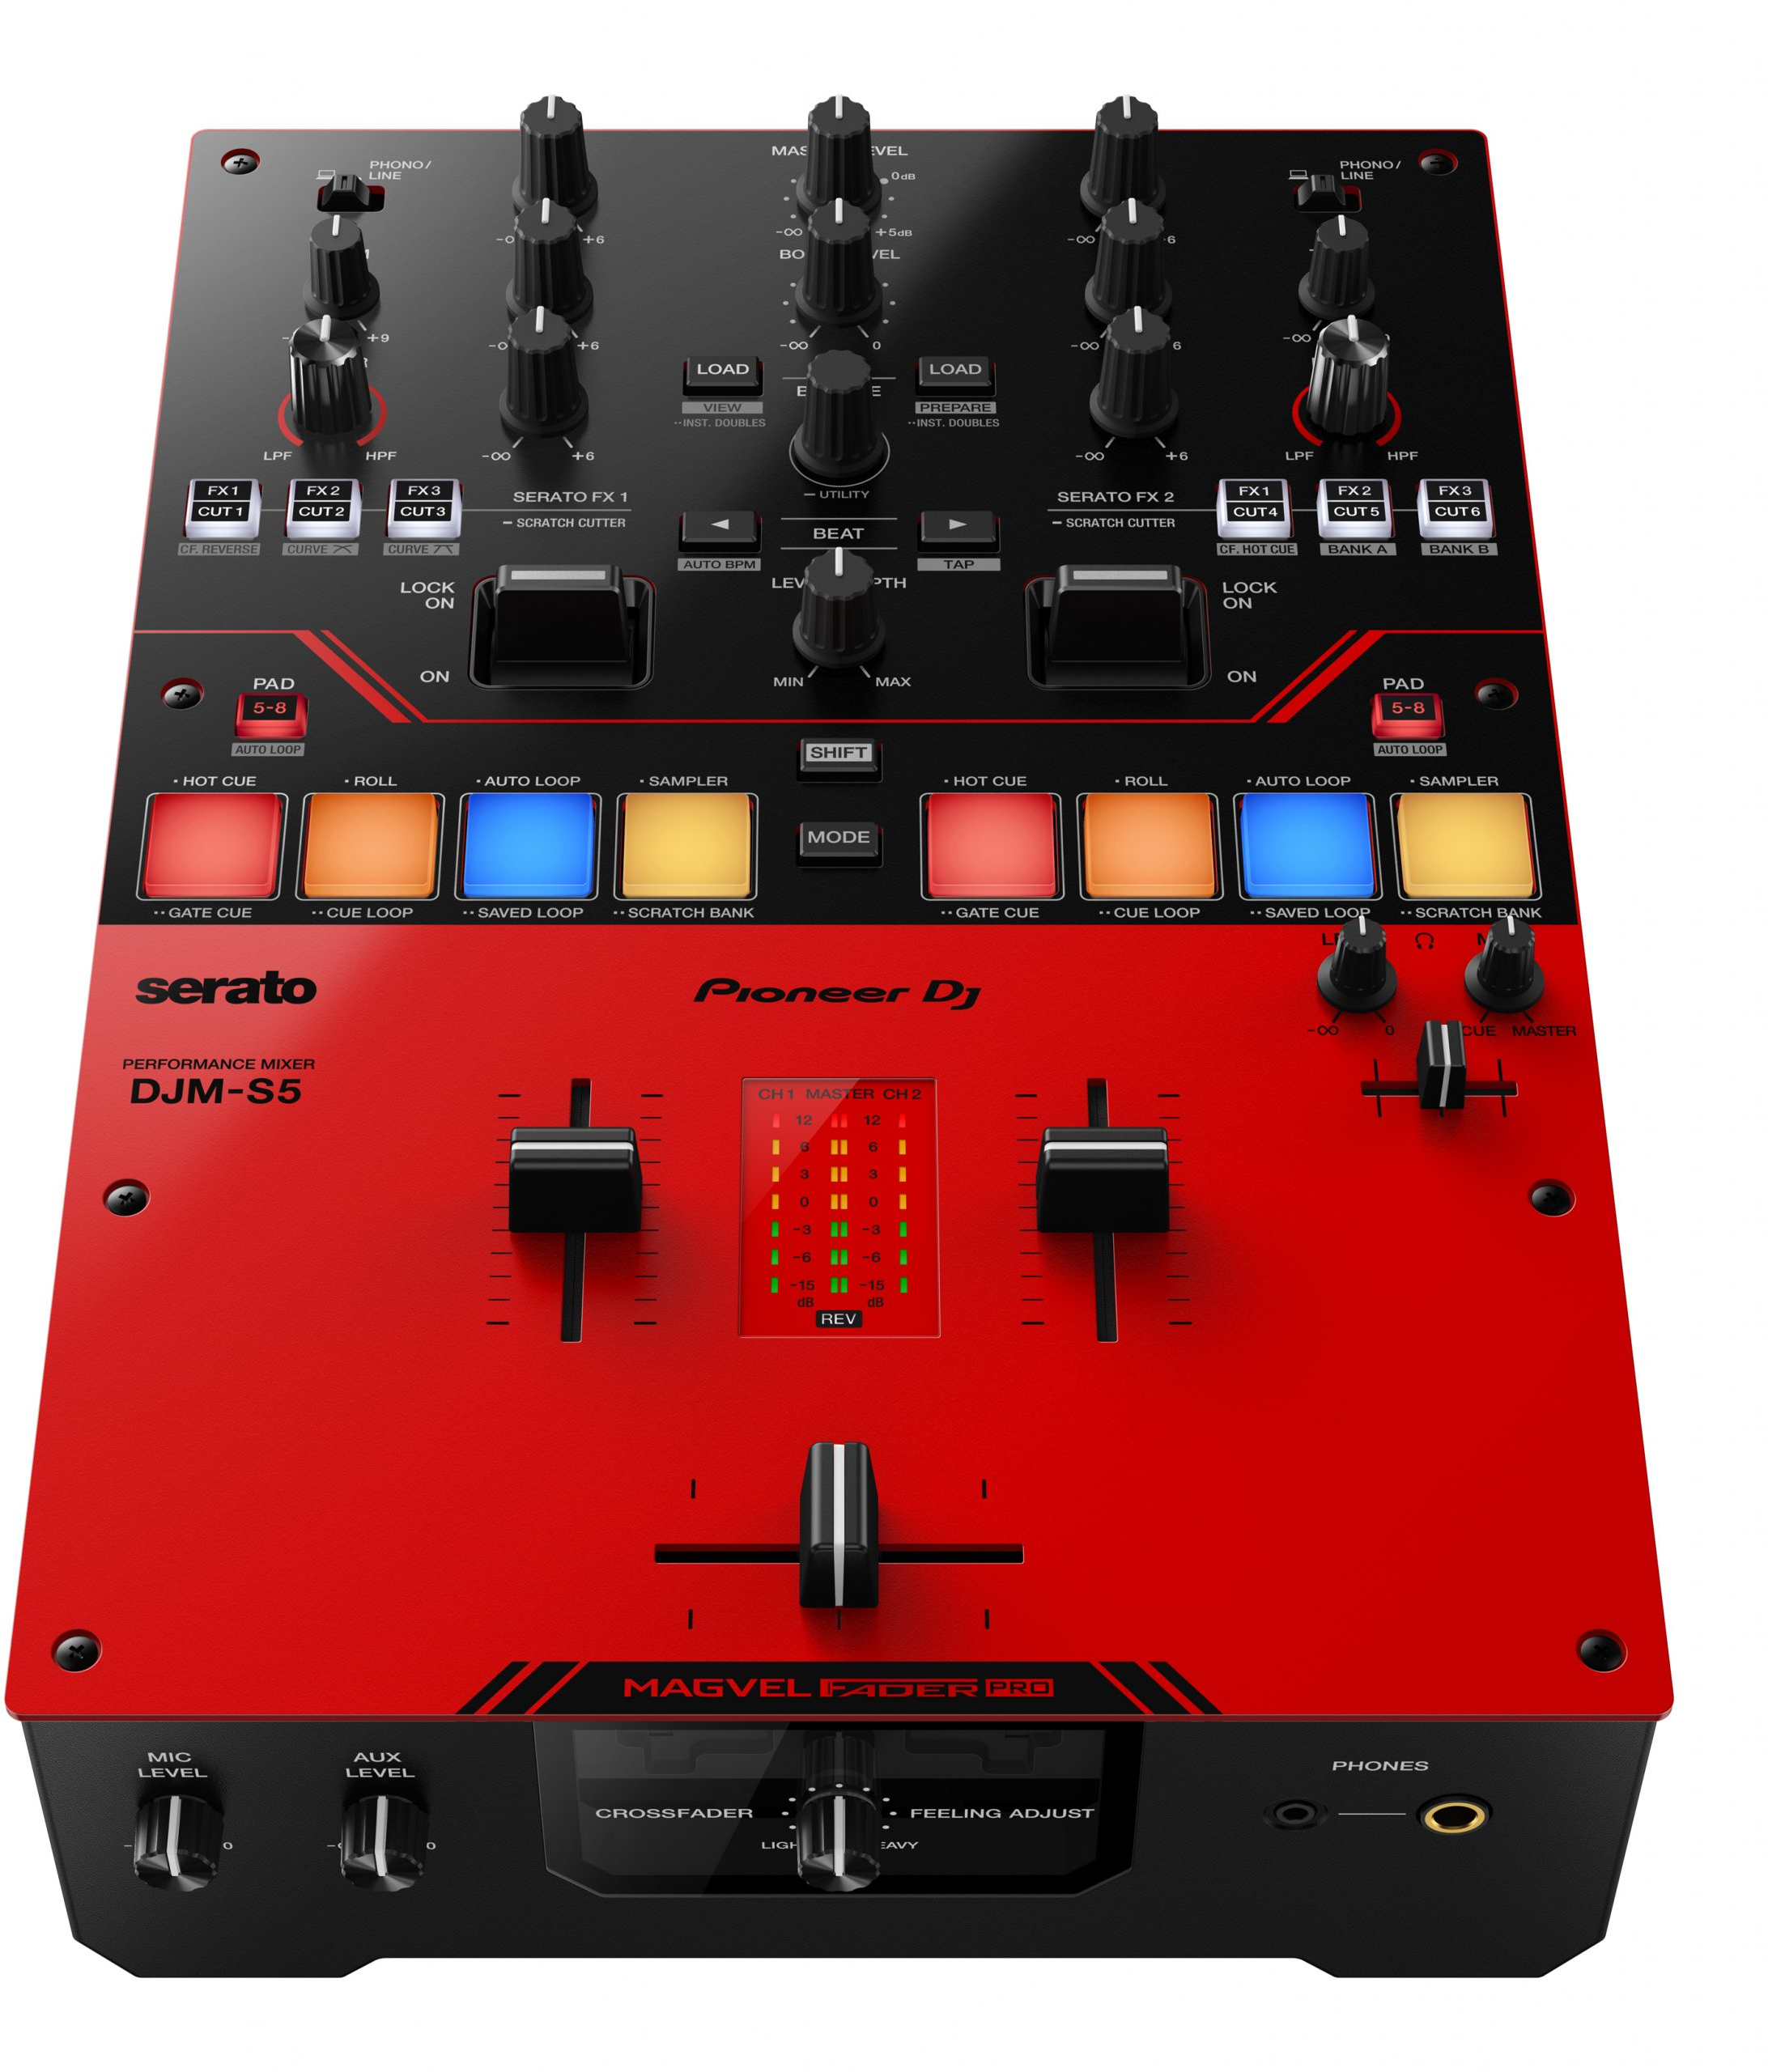 Pioneer Dj Djm S5 - DJ-Mixer - Variation 3